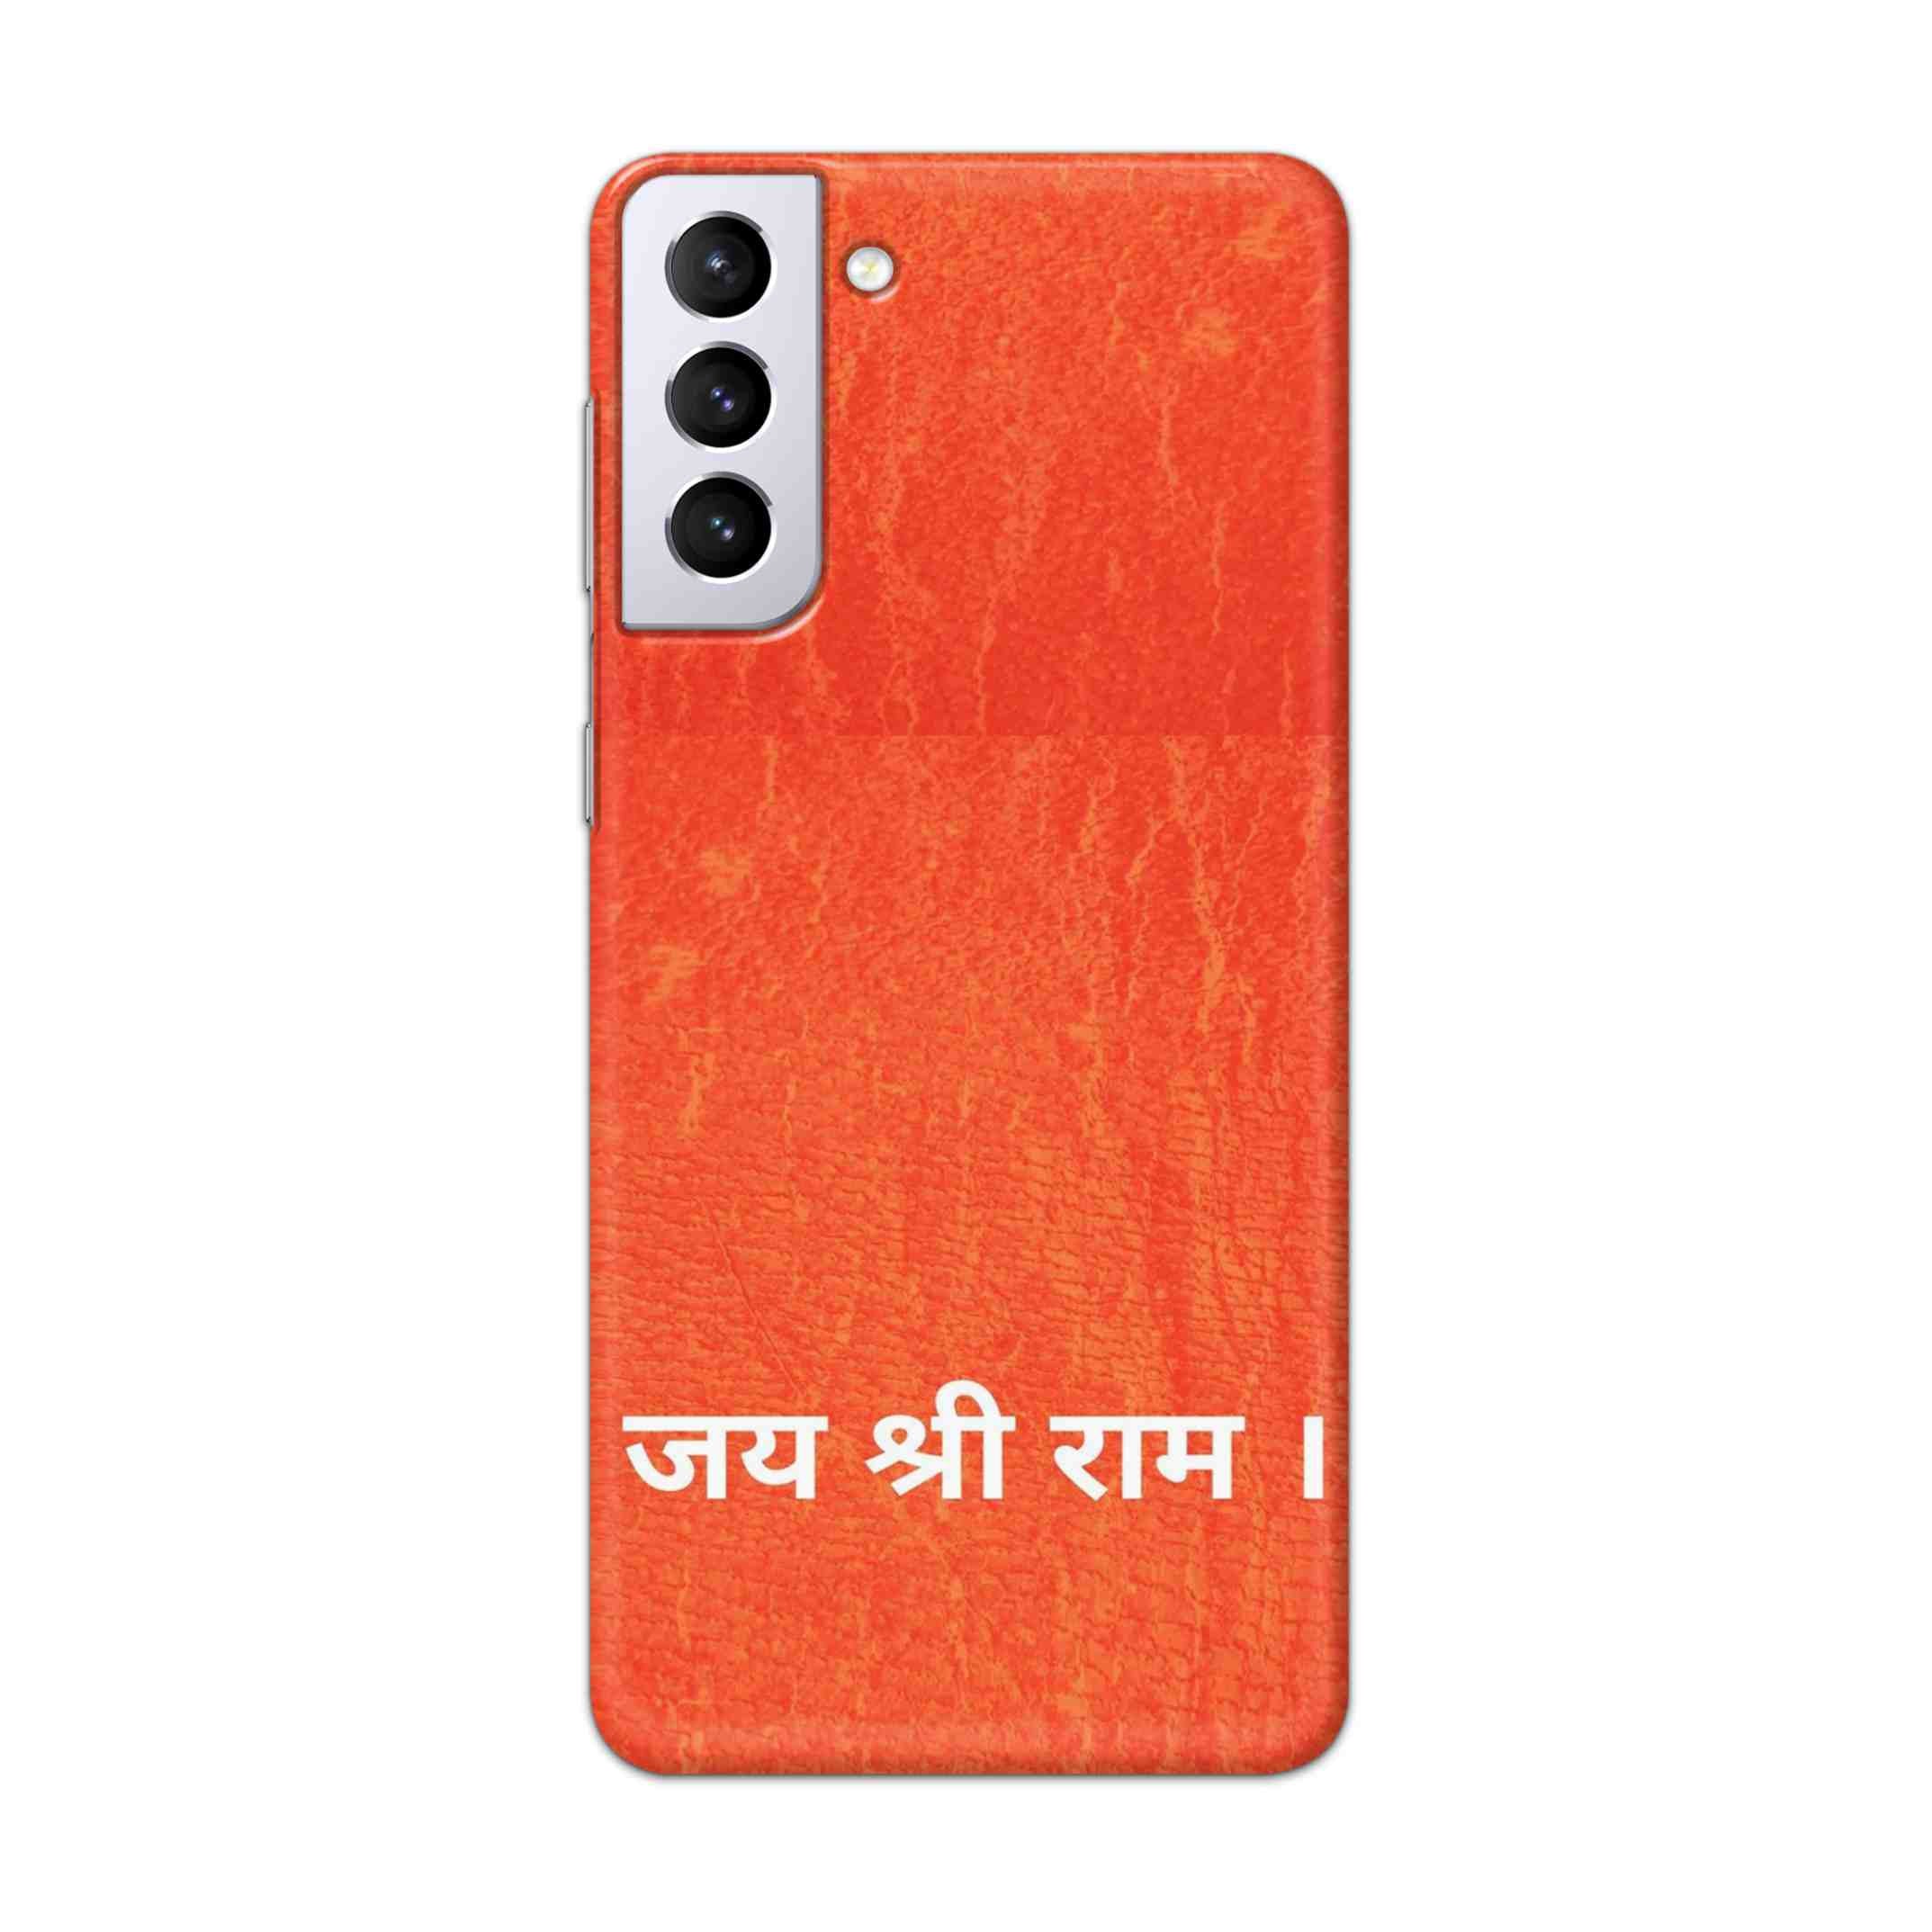 Buy Jai Shree Ram Hard Back Mobile Phone Case Cover For Samsung Galaxy S21 Plus Online